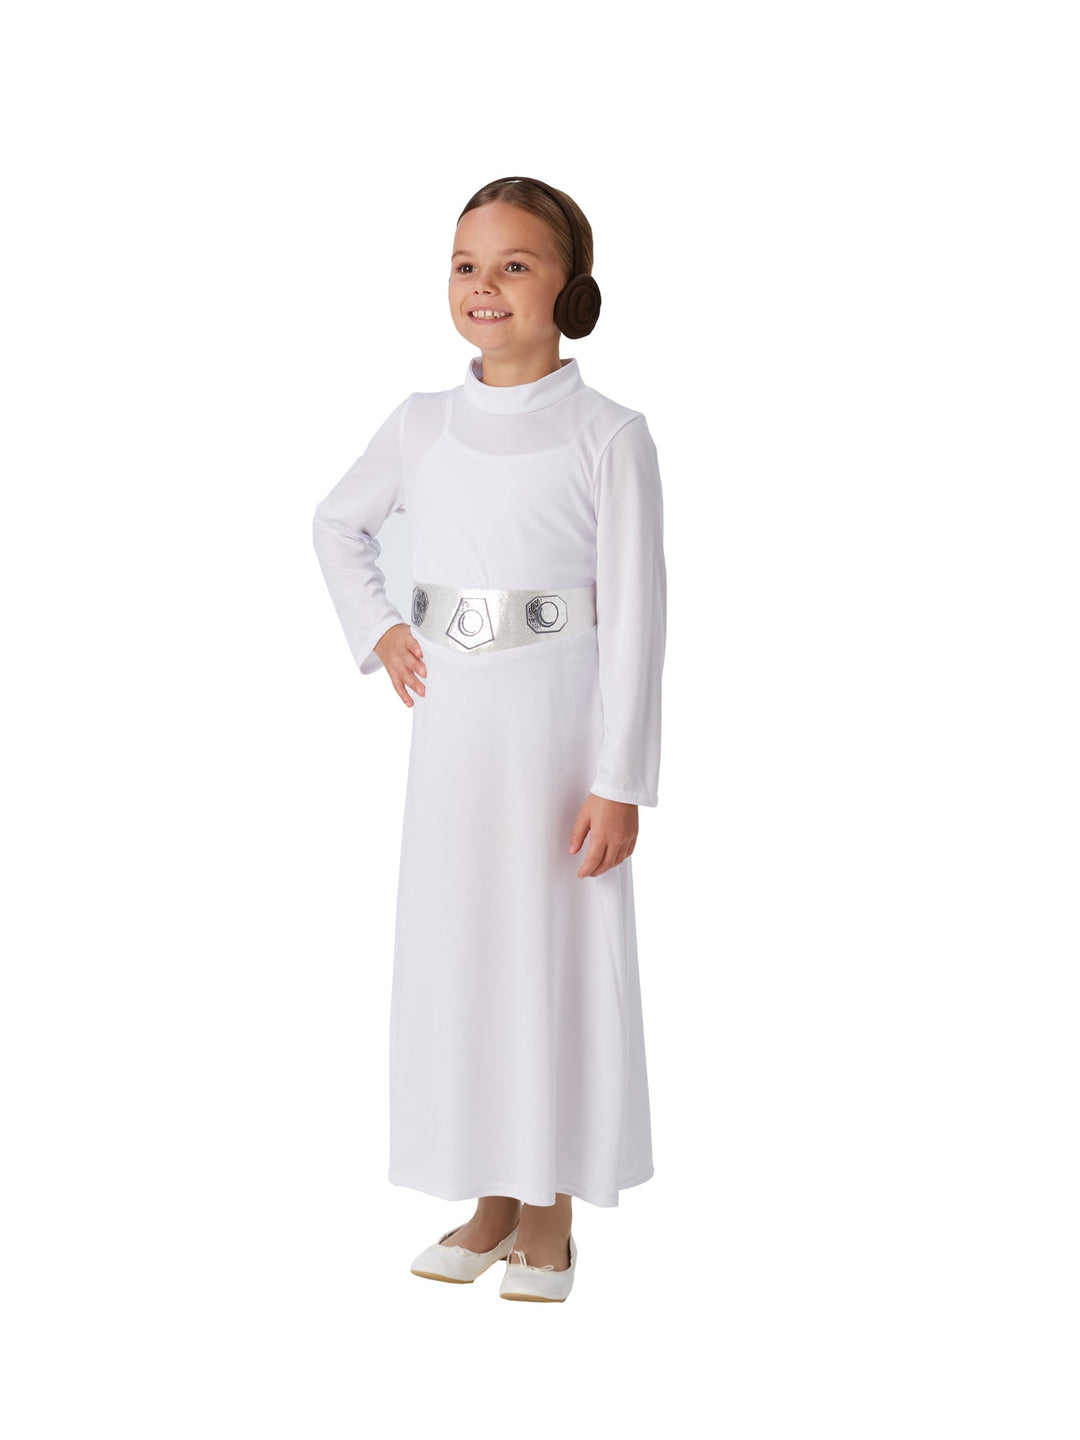 Princess Leia Costume Girls Long White Dress Belt Hair Buns_2